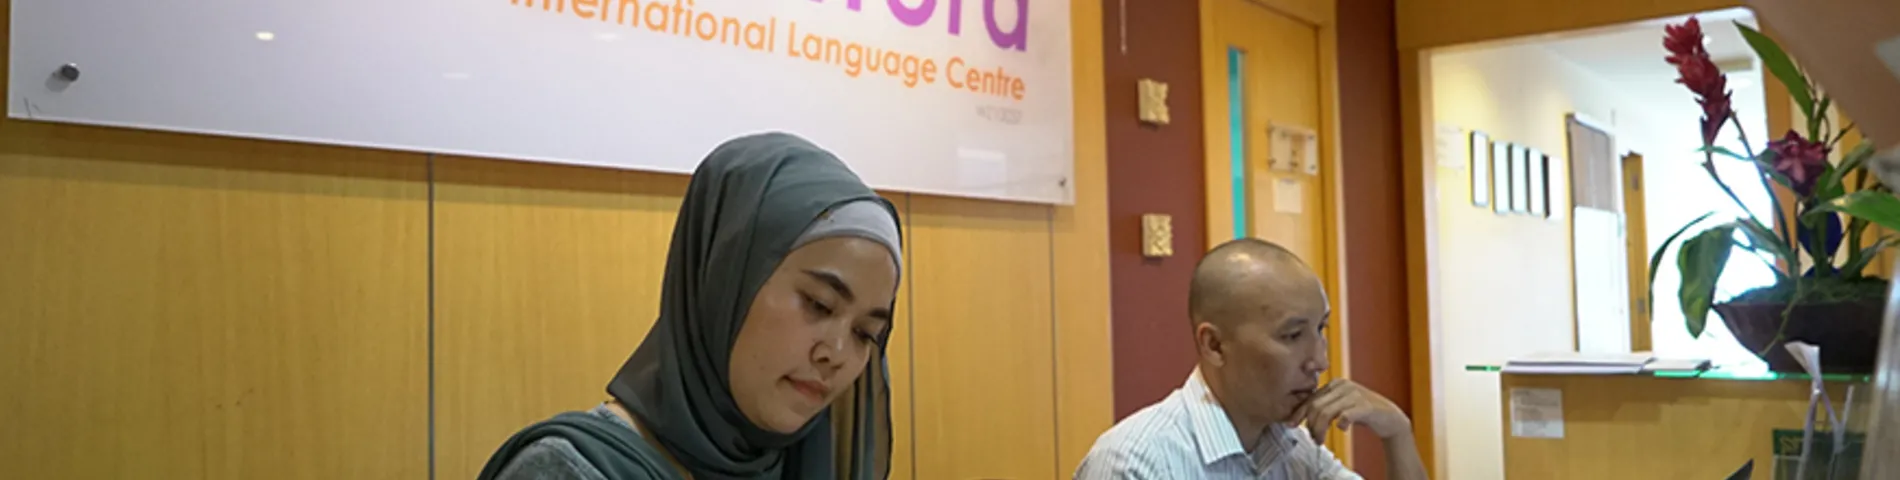 Stratford International Language Centre resim 1